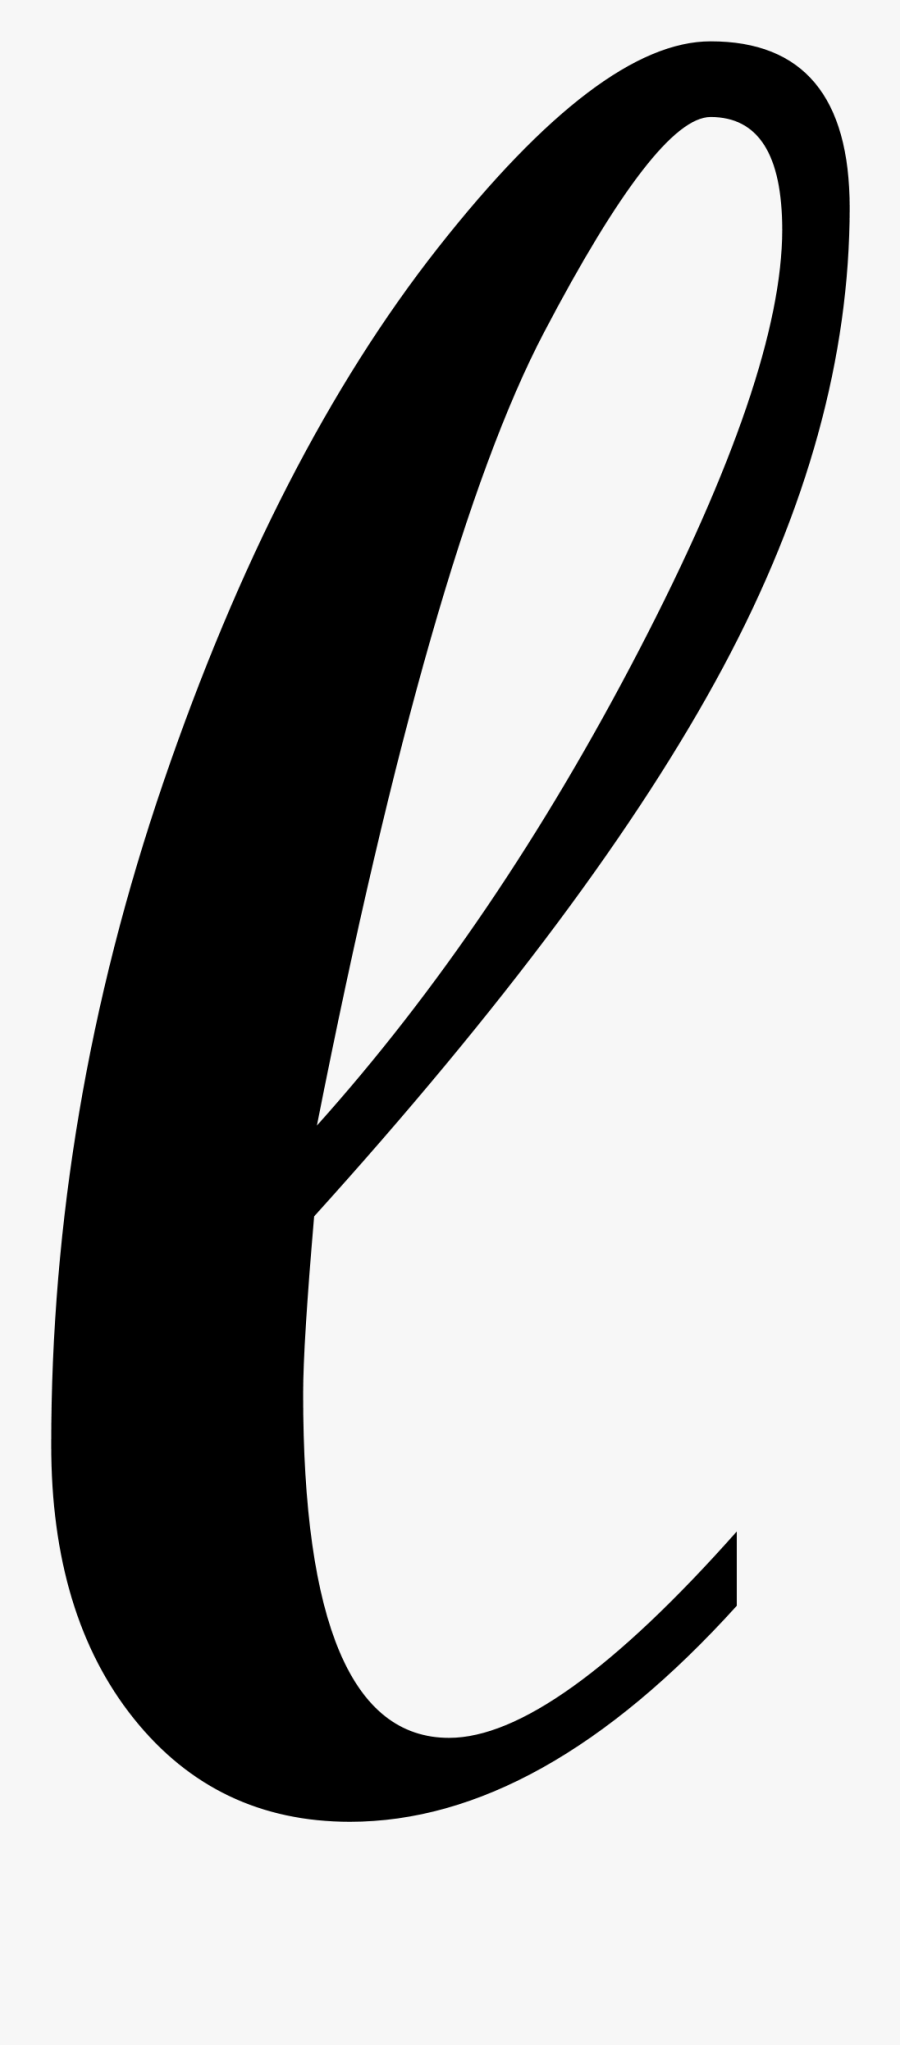 Liter Symbol Clipart Black And White, Transparent Clipart